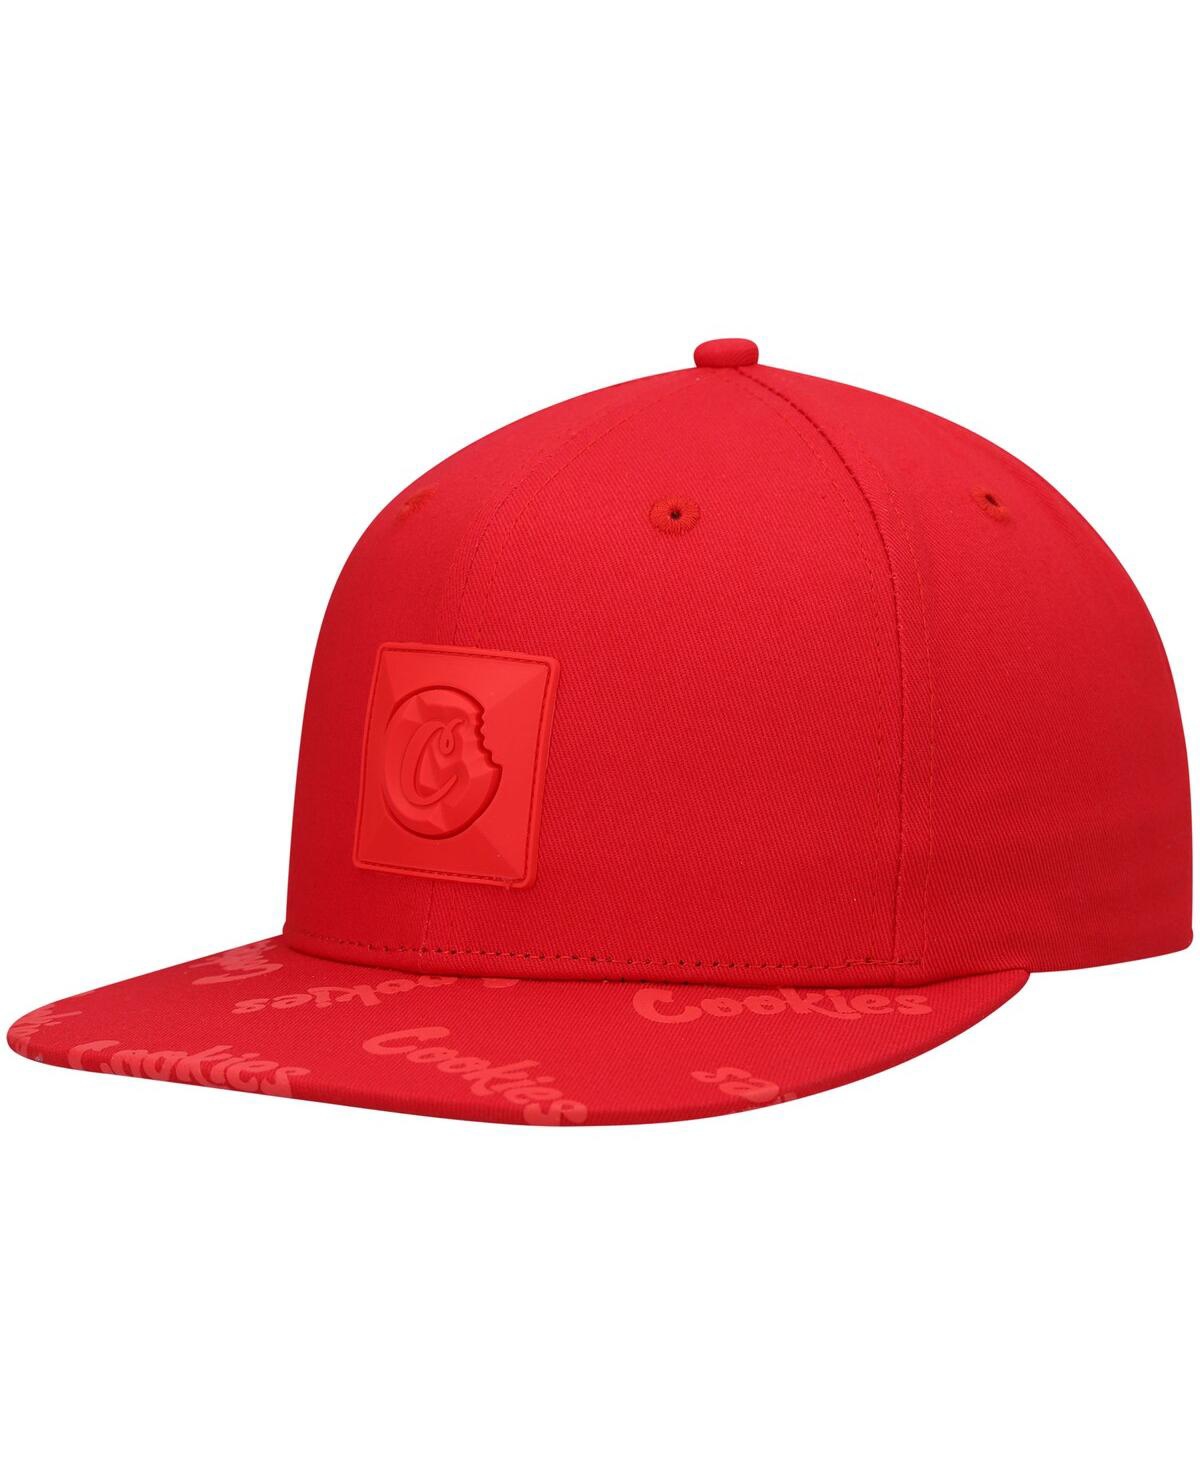 Men's Cookies Red Monaco Snapback Hat - Red